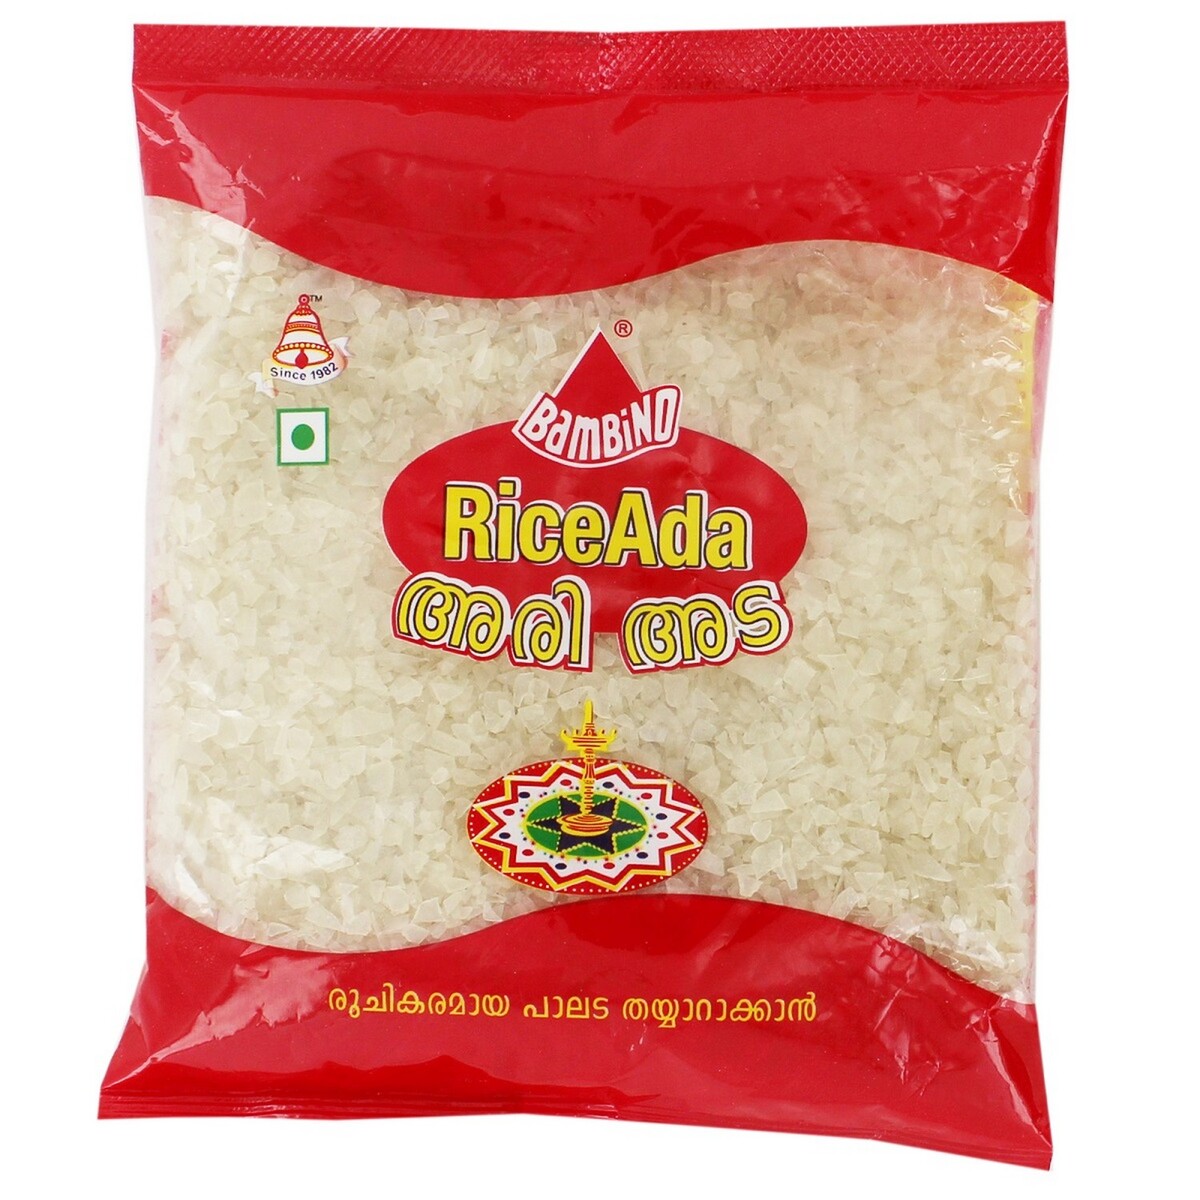 Bambino Rice Ada Small 200g